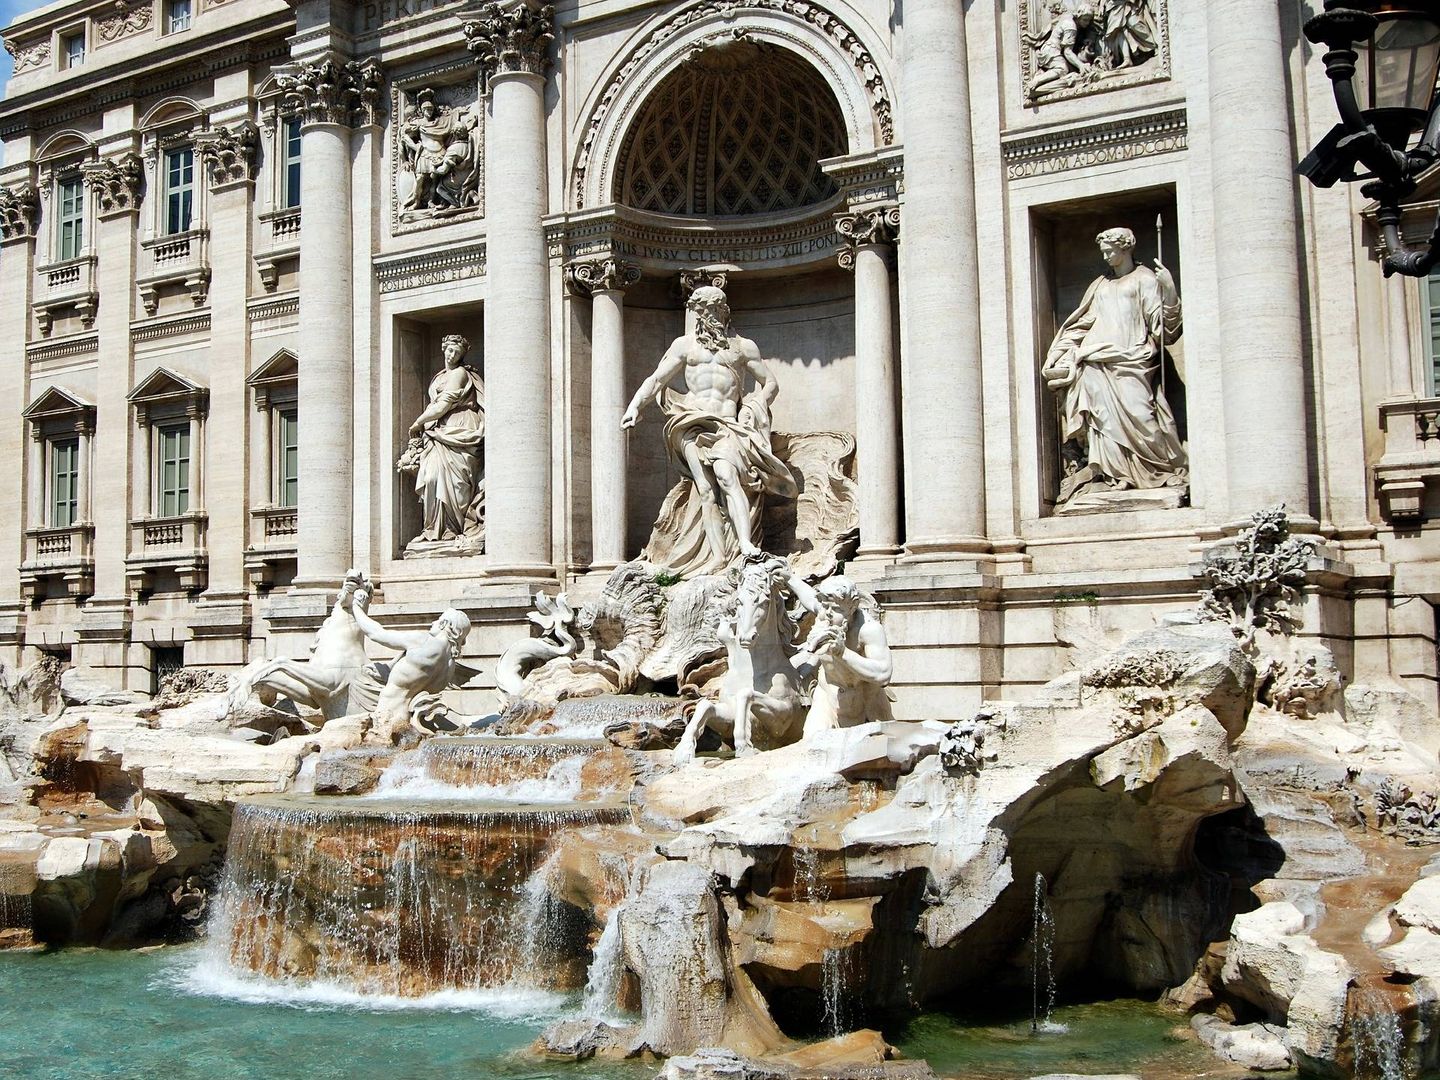 La Fontana di Trevi. (Gianni Crestani en Pixabay)